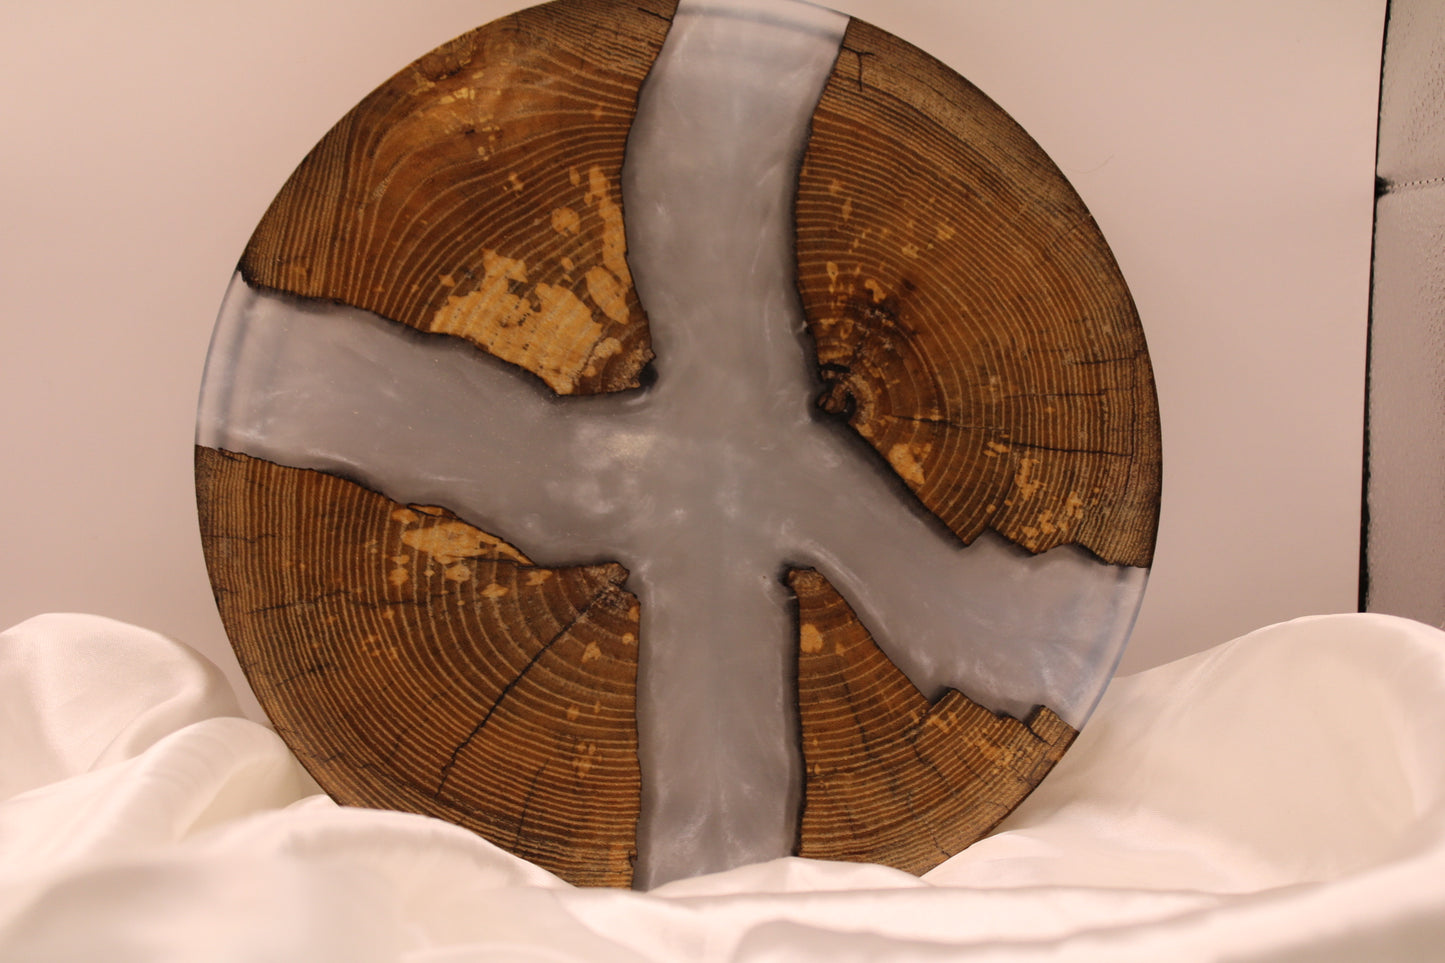 Woodturned Plate